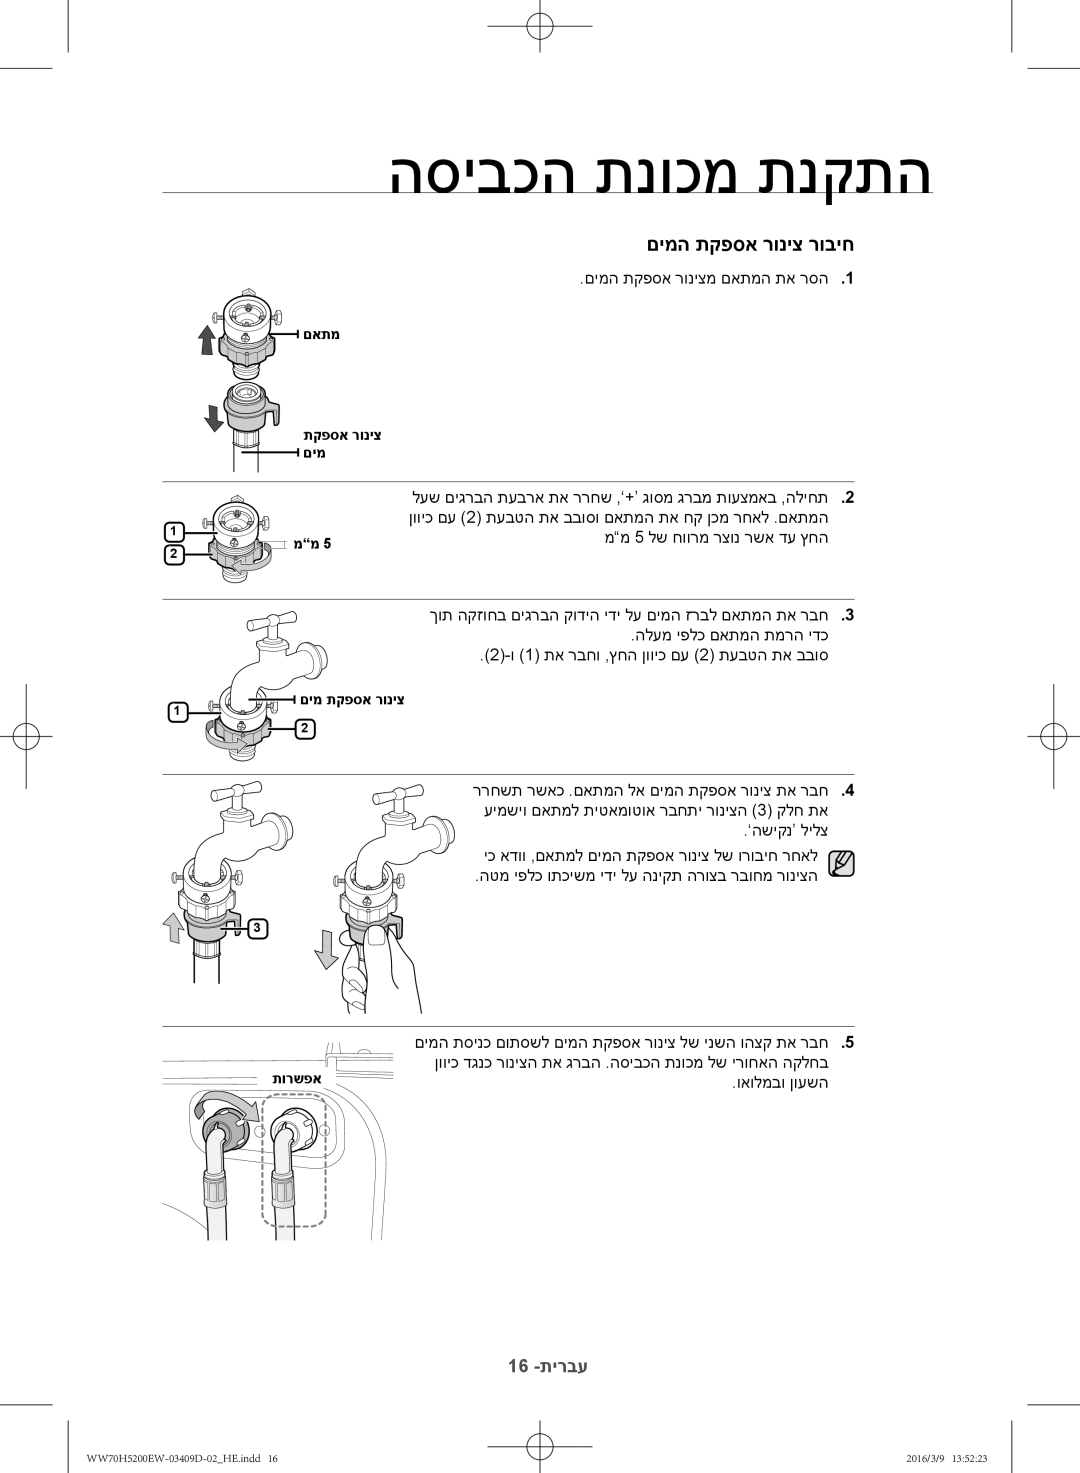 Samsung WW70H5200EW/KJ manual 16 -תירבע 